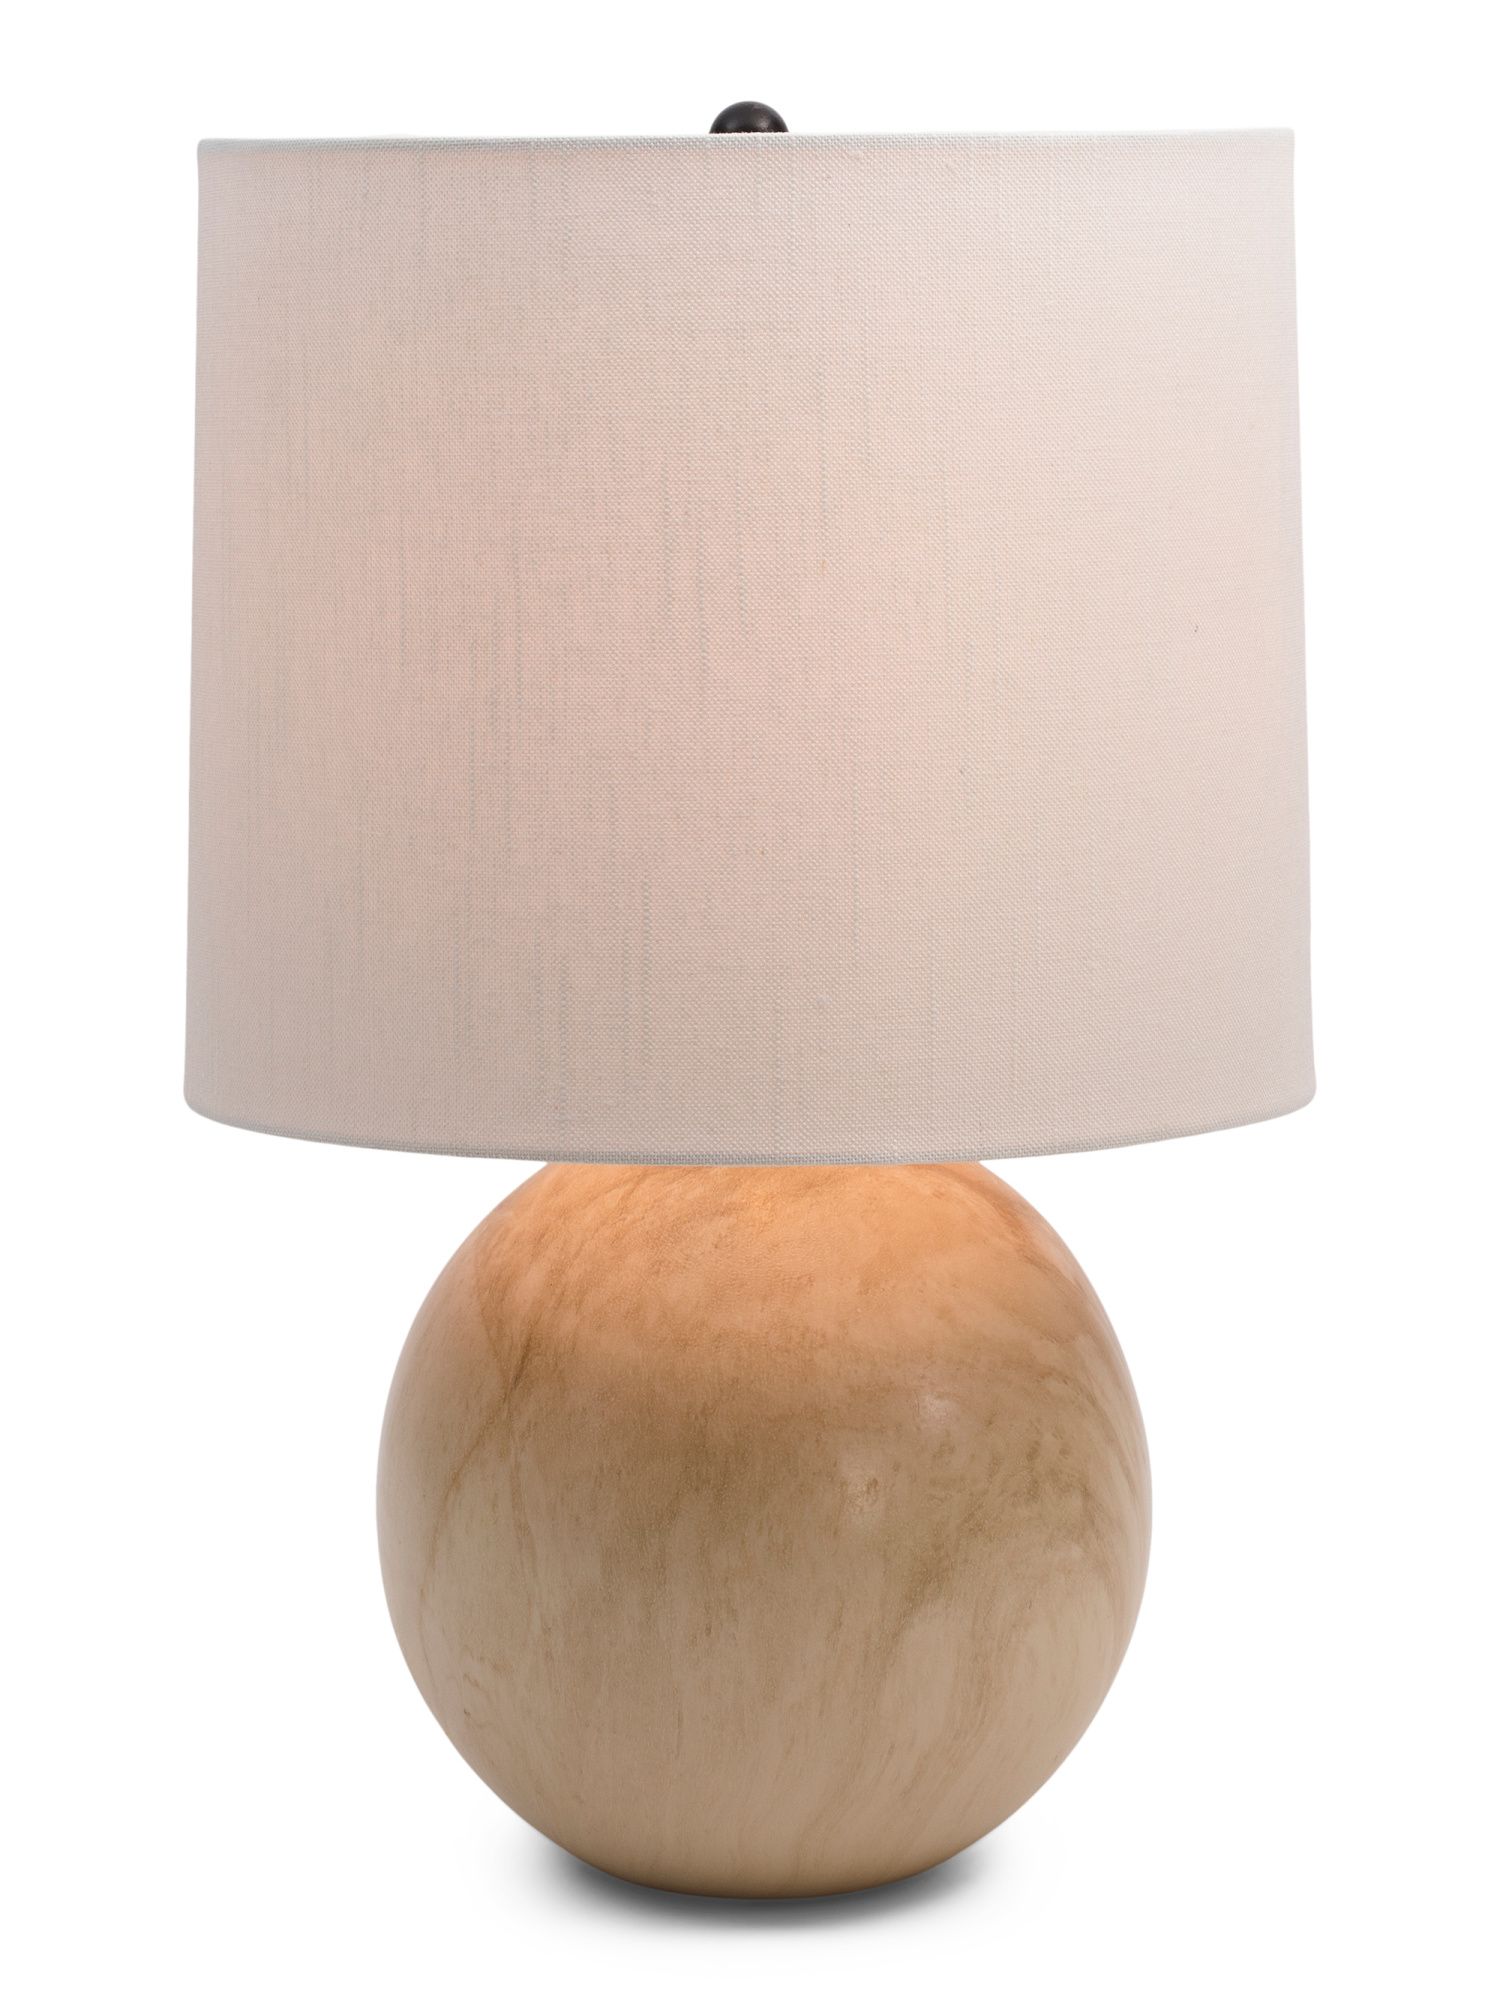 22in Vogel Table Lamp | TJ Maxx